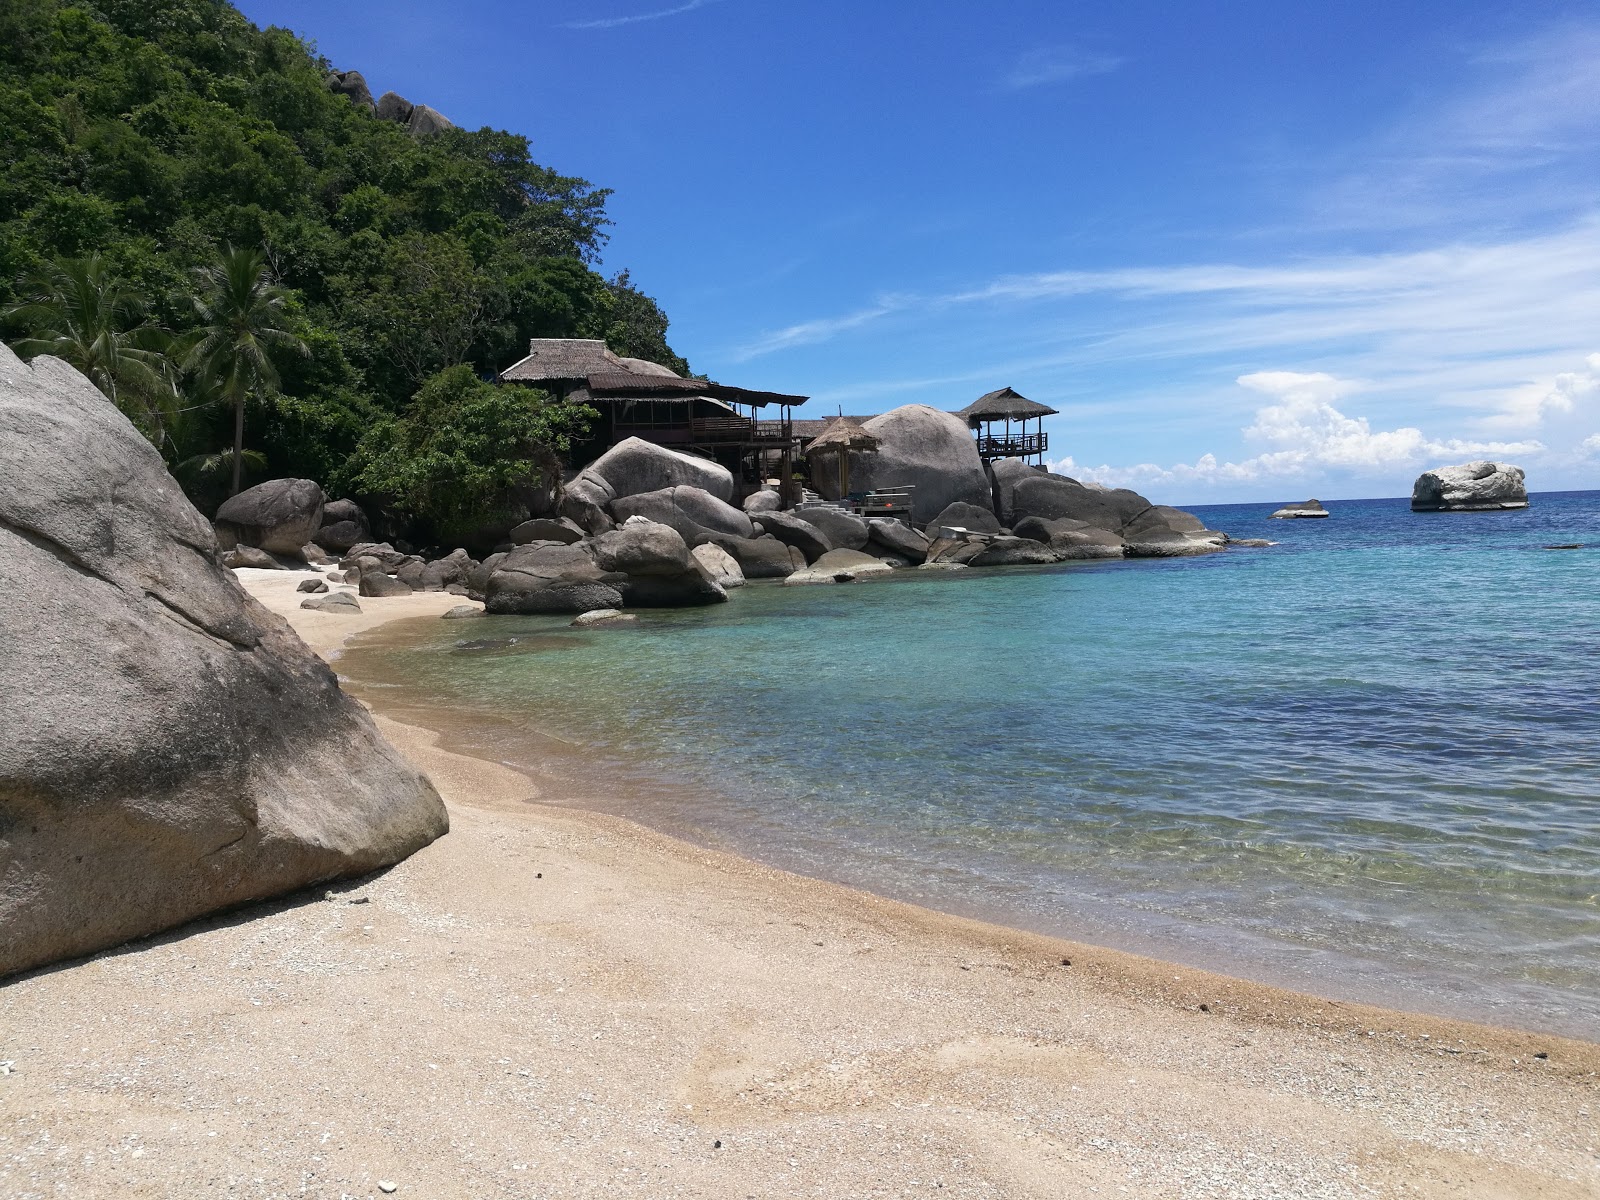 Photo of Jansom Bay beach resort area